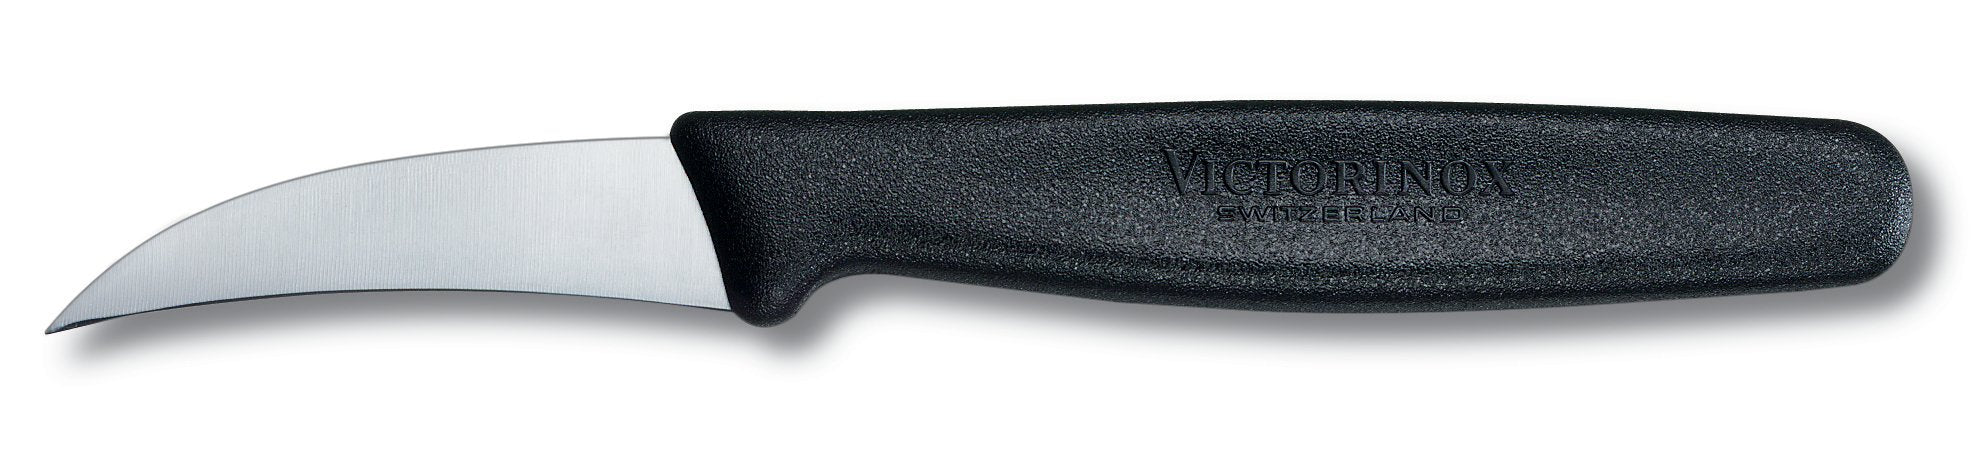 Victorinox 6cm Shaping Knife Black